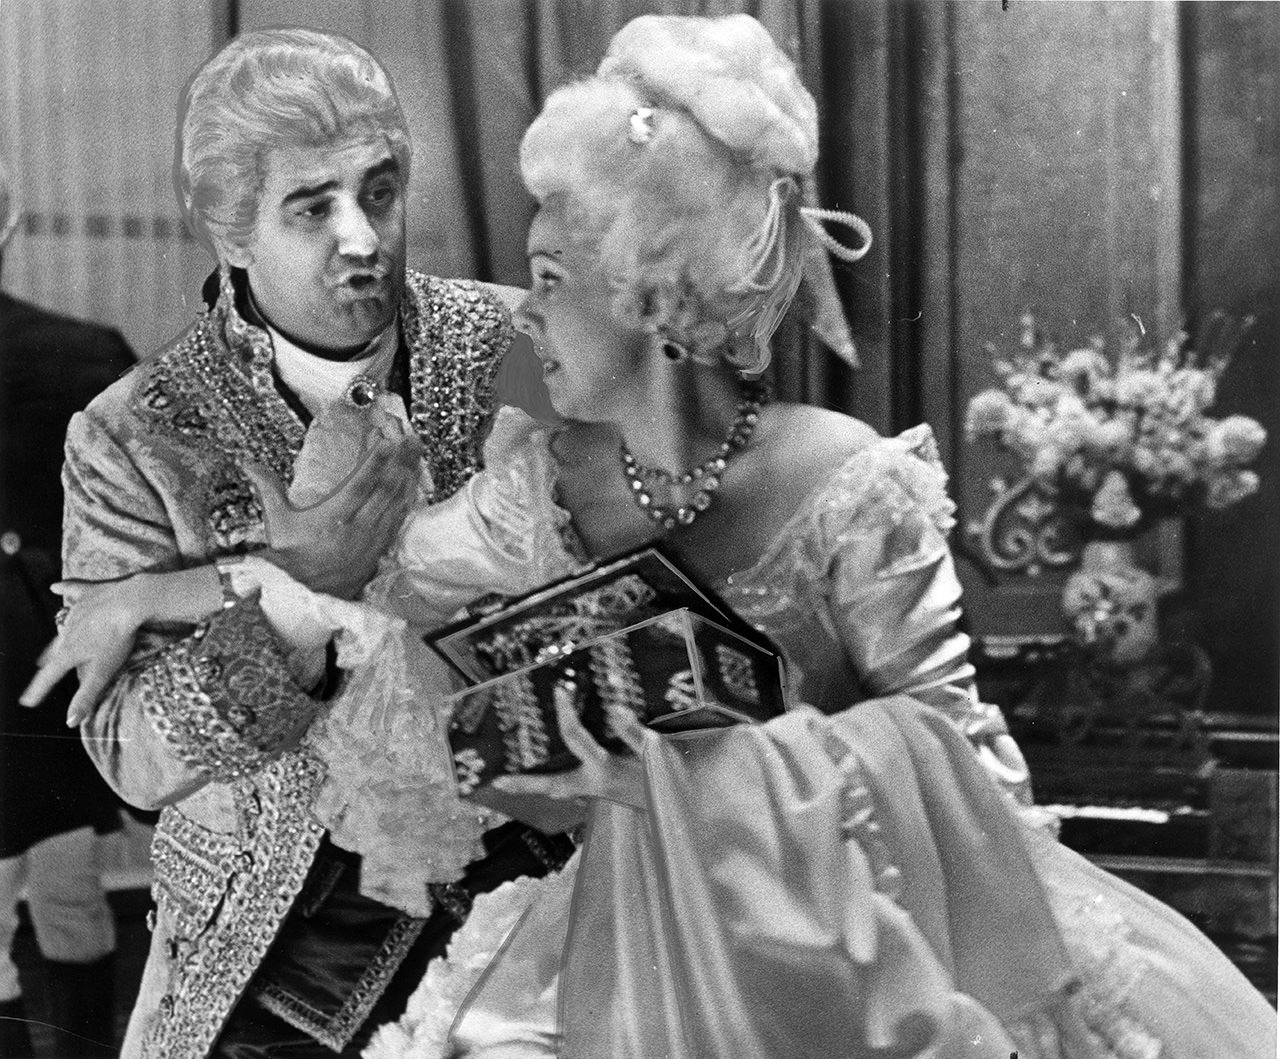 Placido Domingo and Raina Kabaivanska in Fort Worth Opera Assoc production of Puccini's "Manon Lescaut", 1968